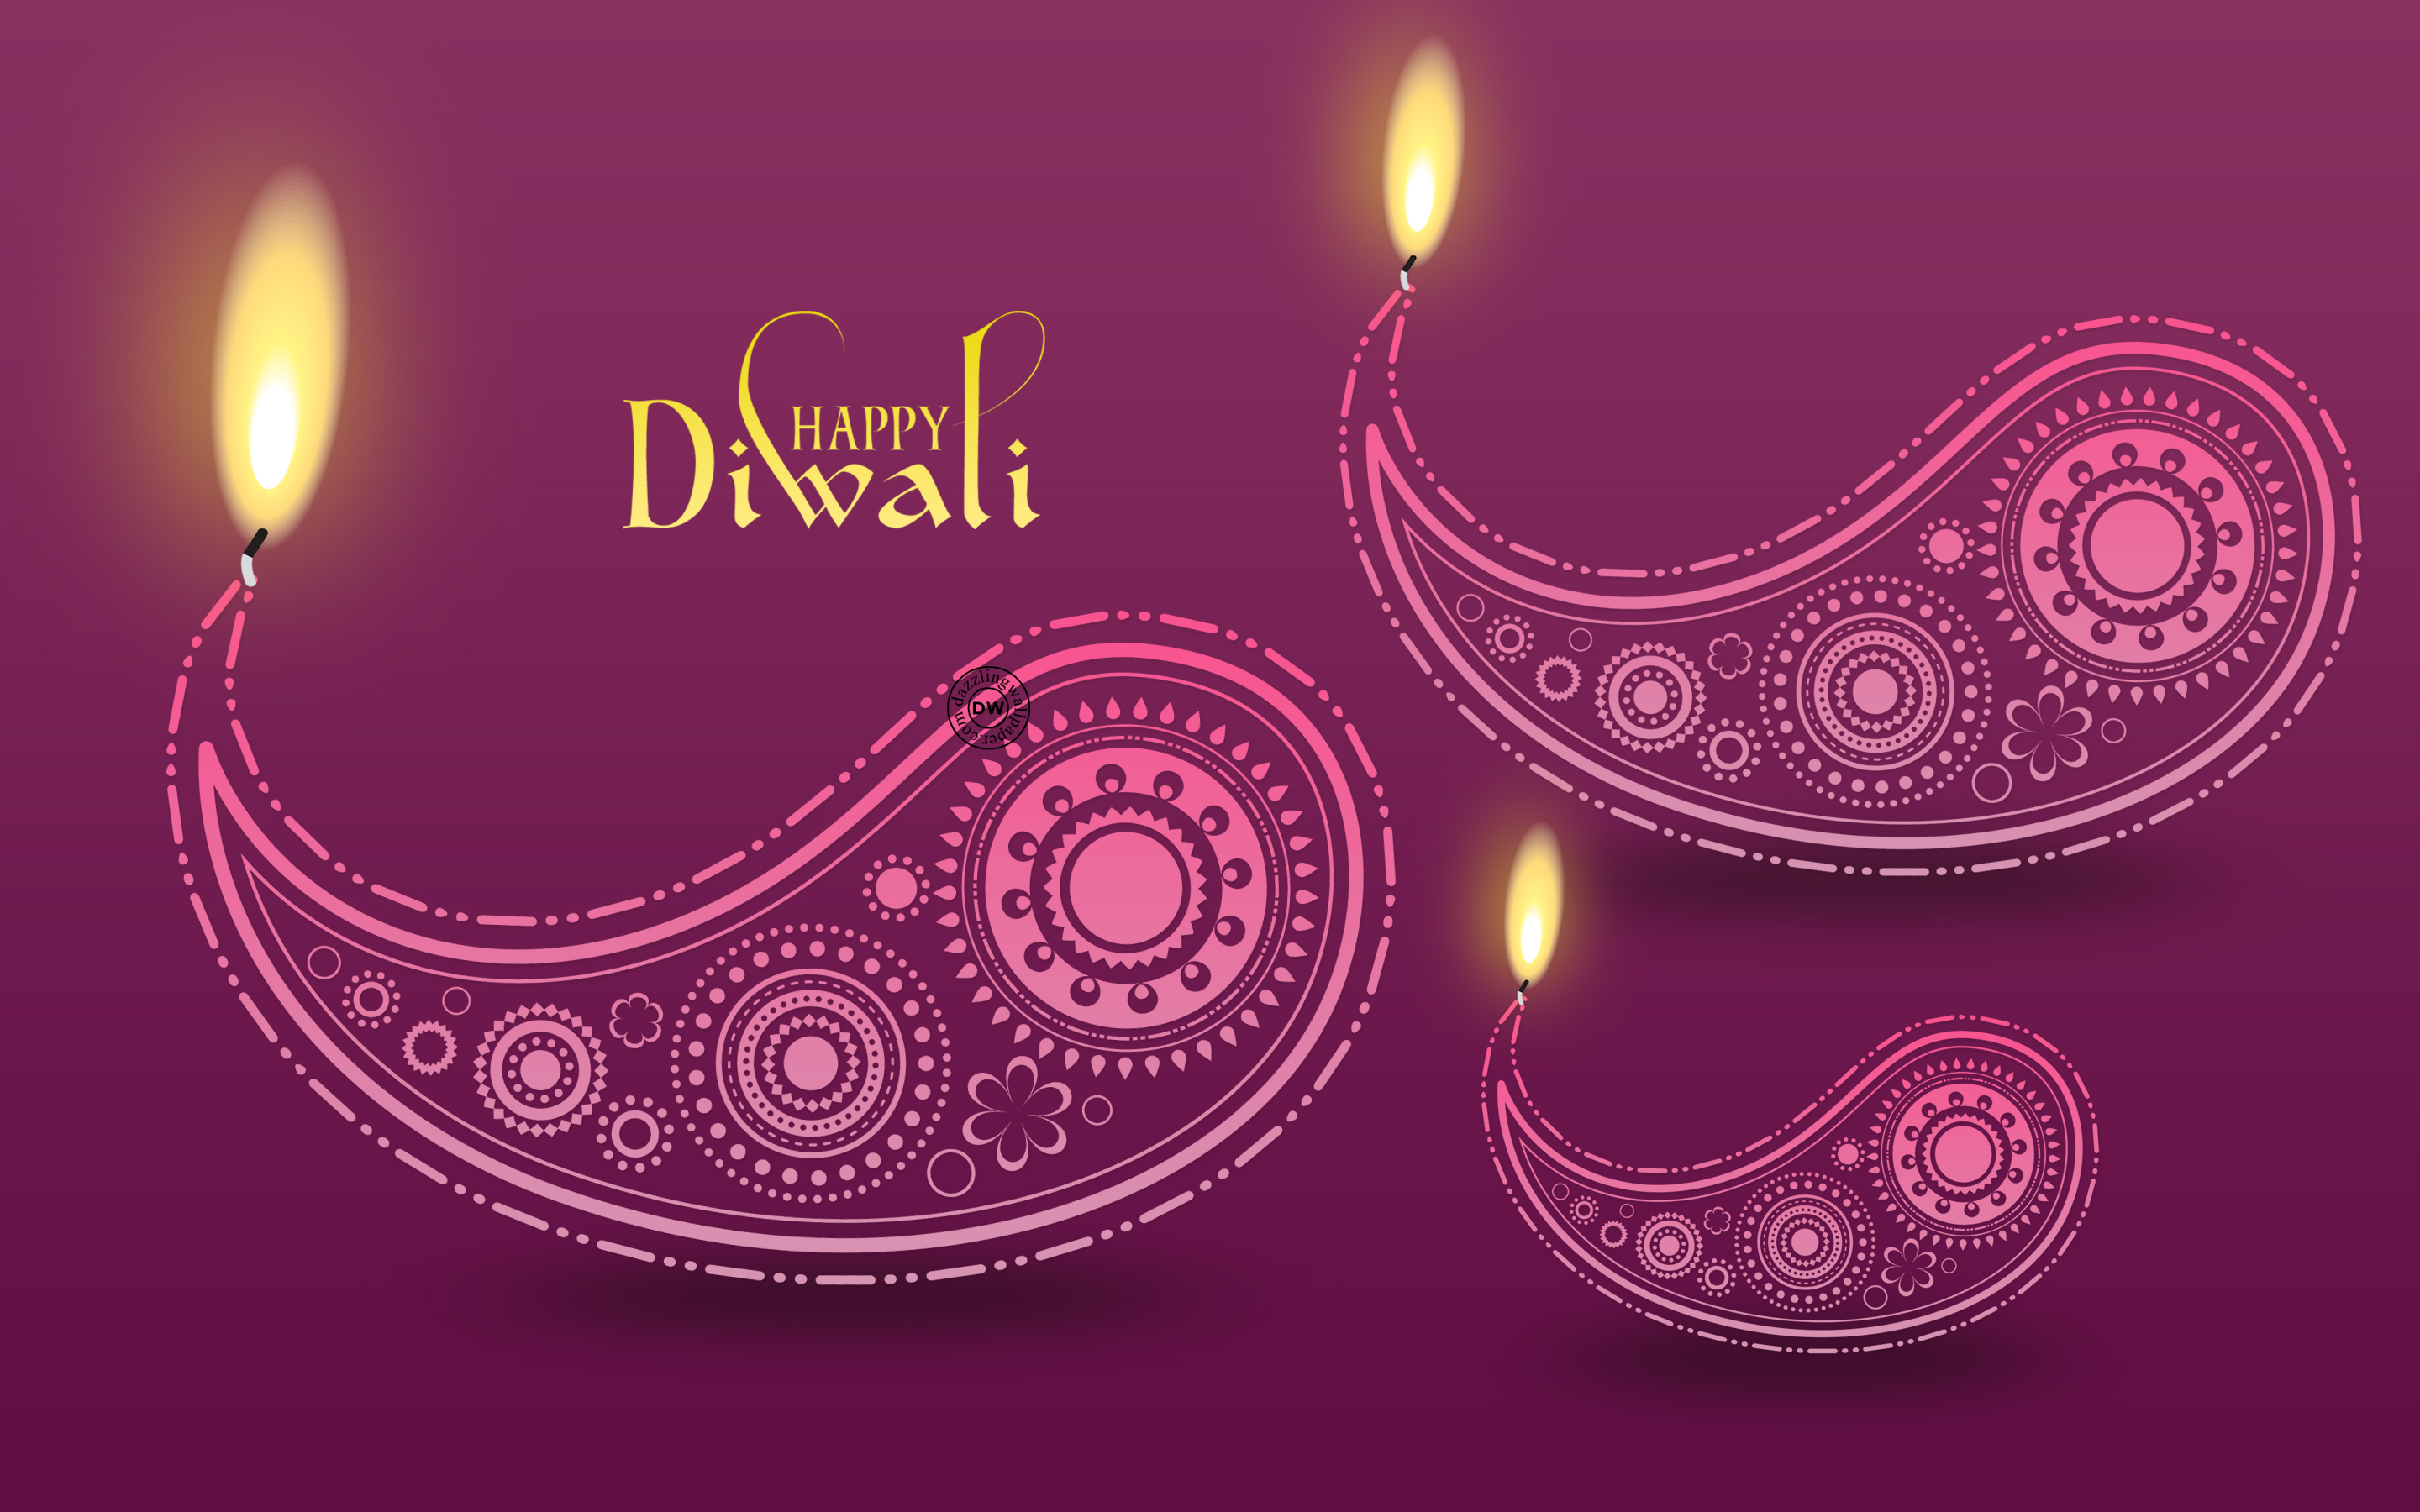 diwali hd wallpaper with beautiful diva